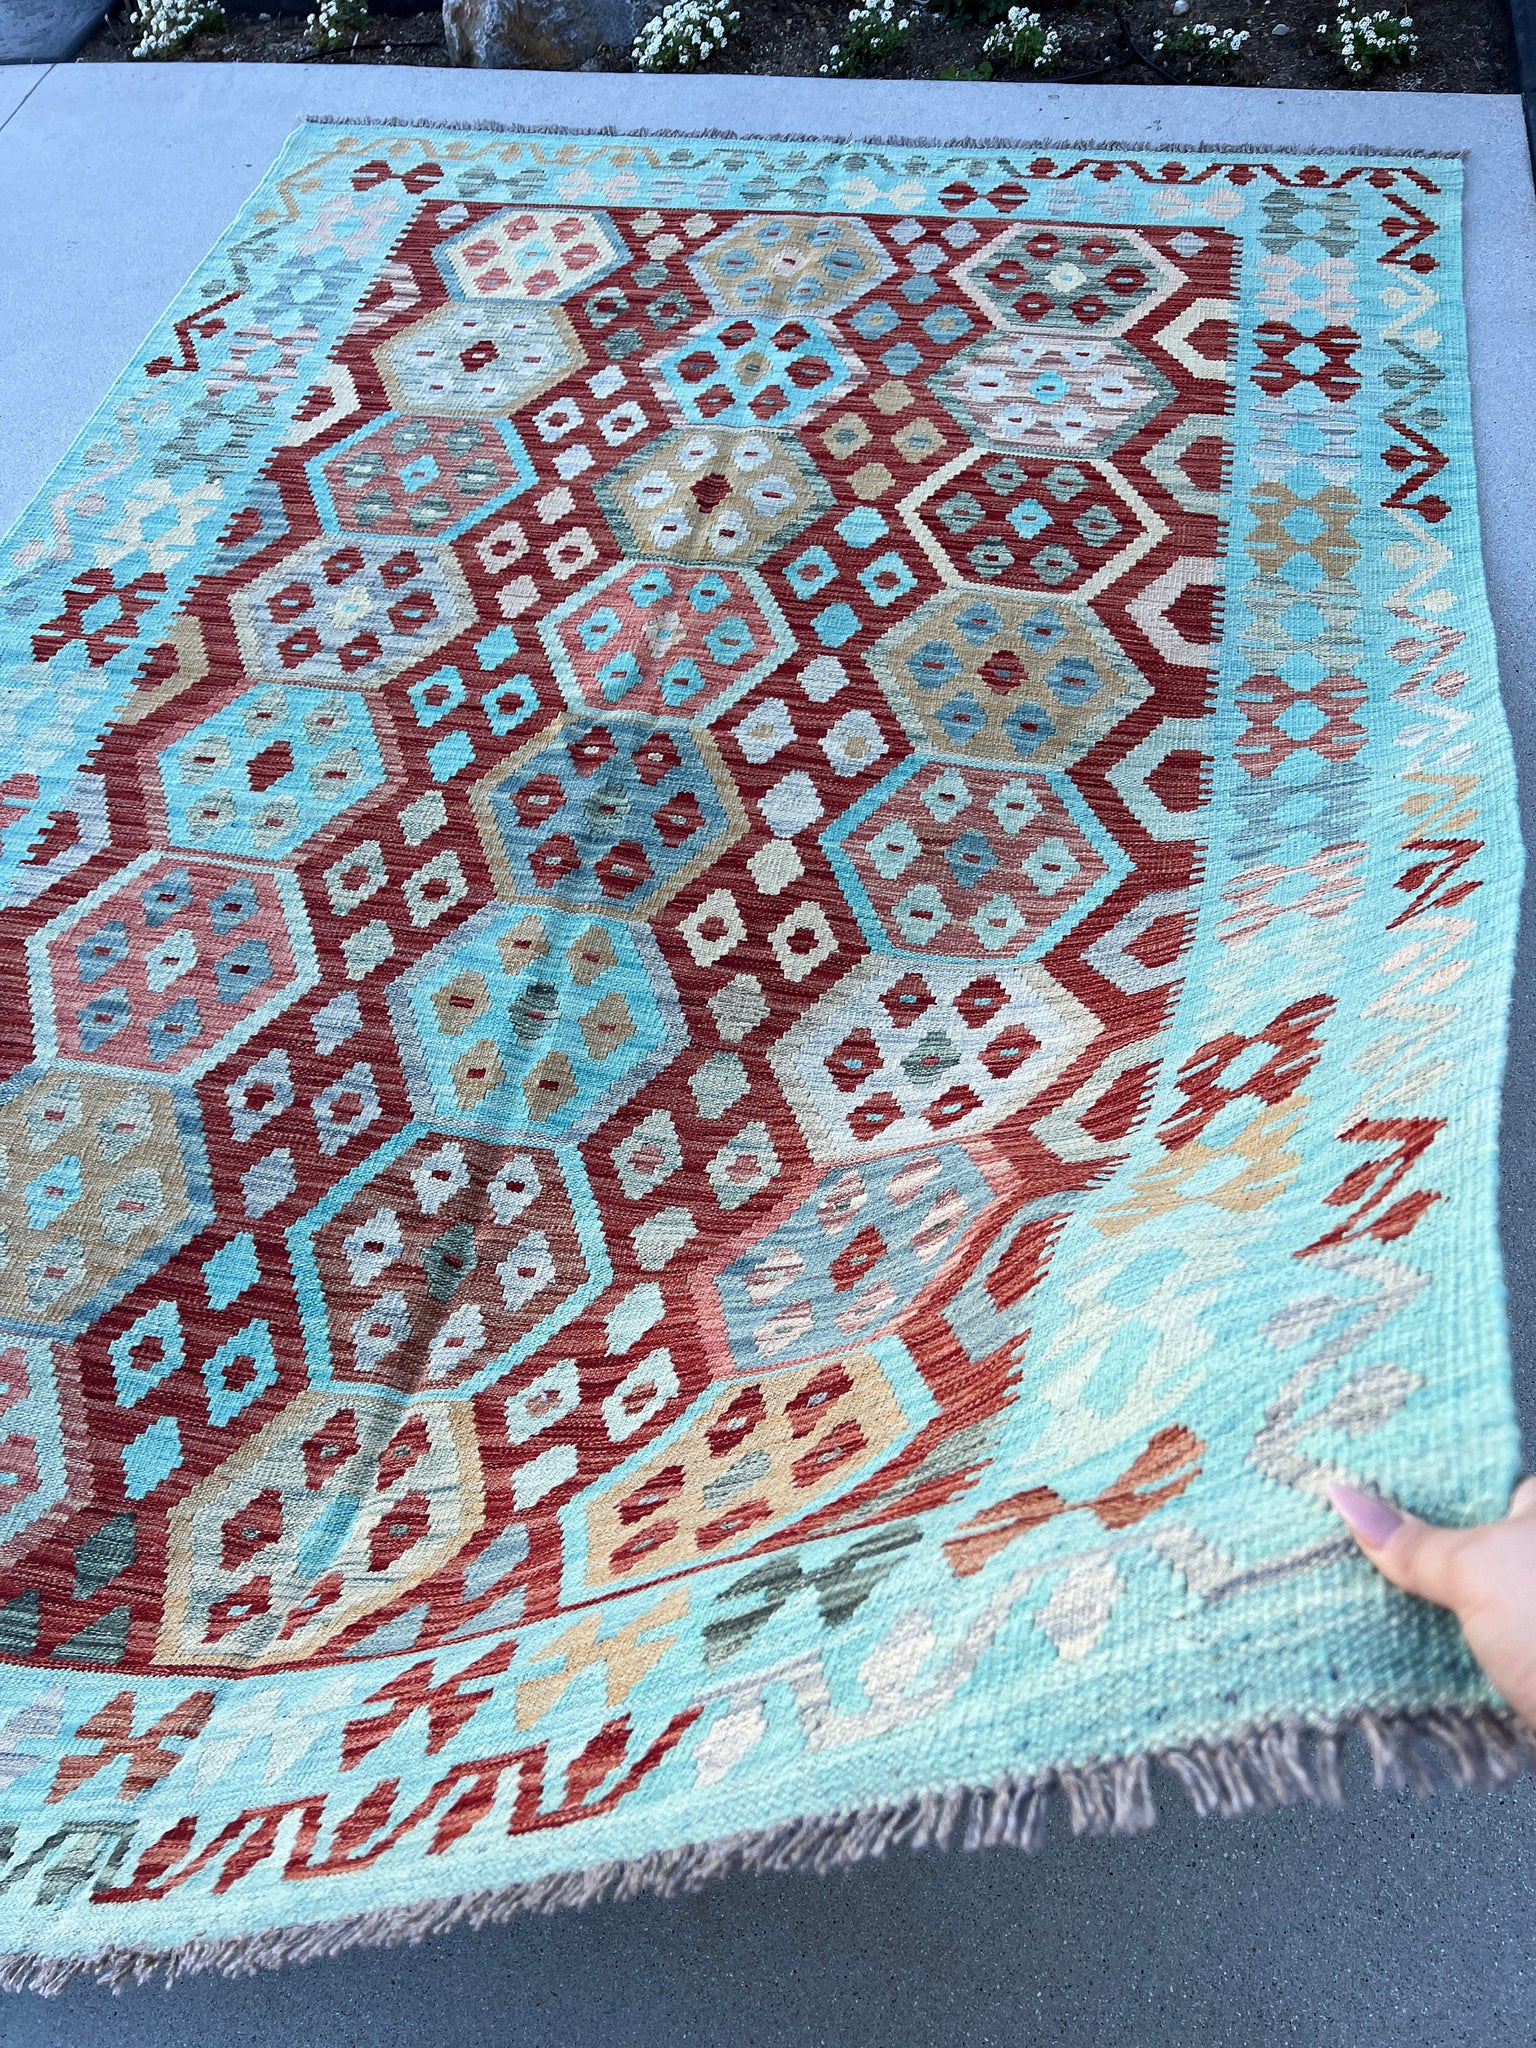 6x8 (180x245) Handmade Afghan Kilim Rug | Turquoise Teal Crimson Brick Red Light Brown Taupe Purple Denim Blue Grey | Hand Knotted Geometric